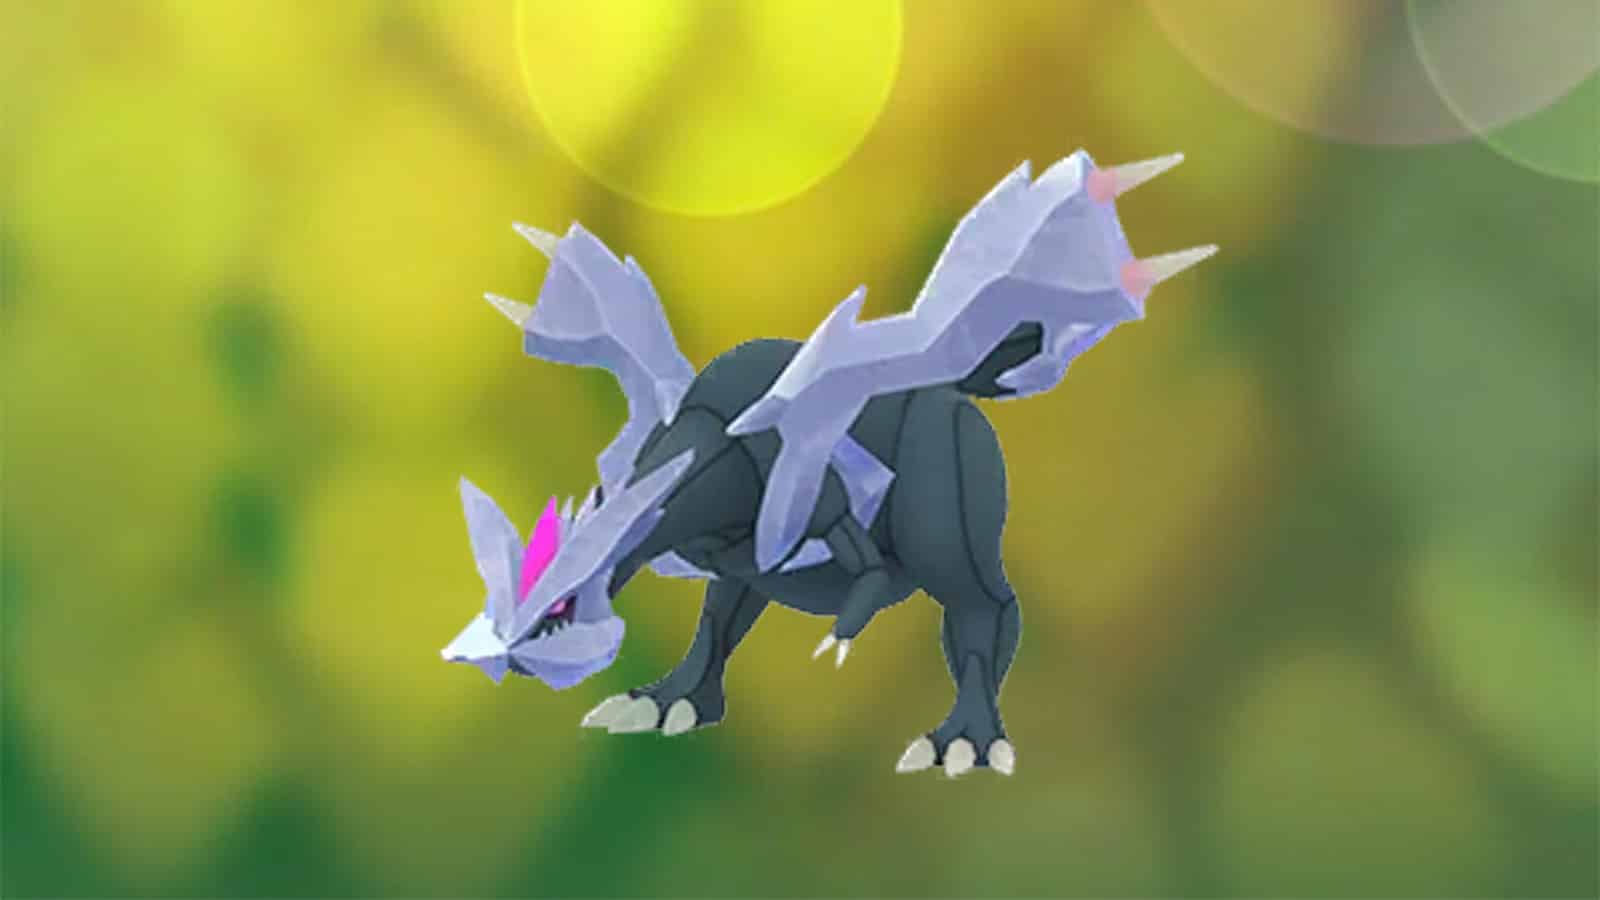 Shiny Kyurem appearing in Pokemon GO